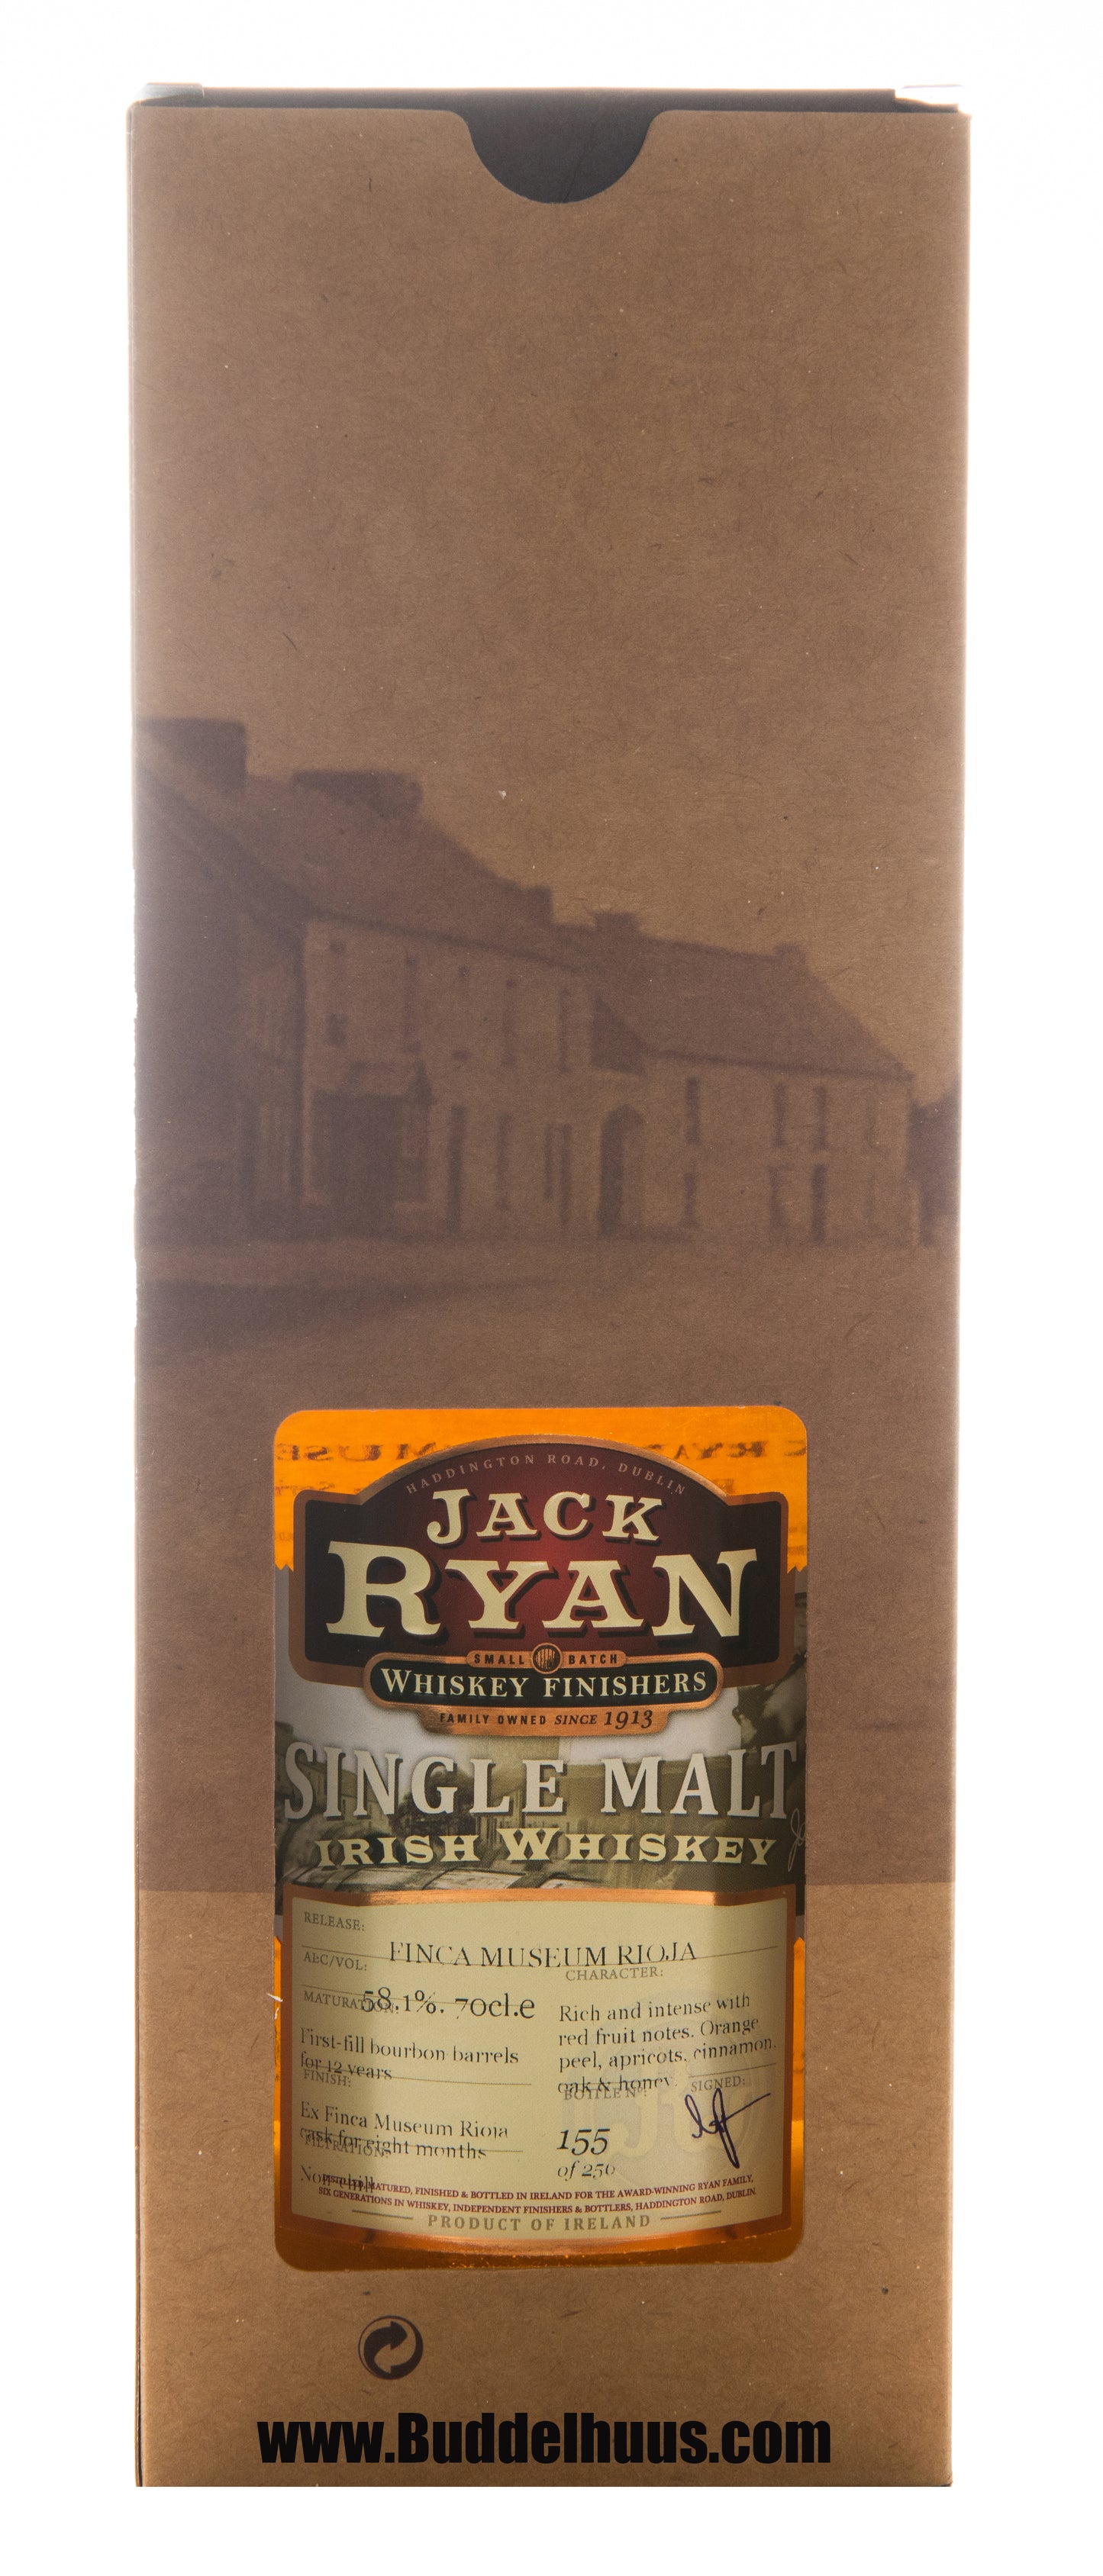 Jack Ryan 12 yo Finca Museum Rioja Cask